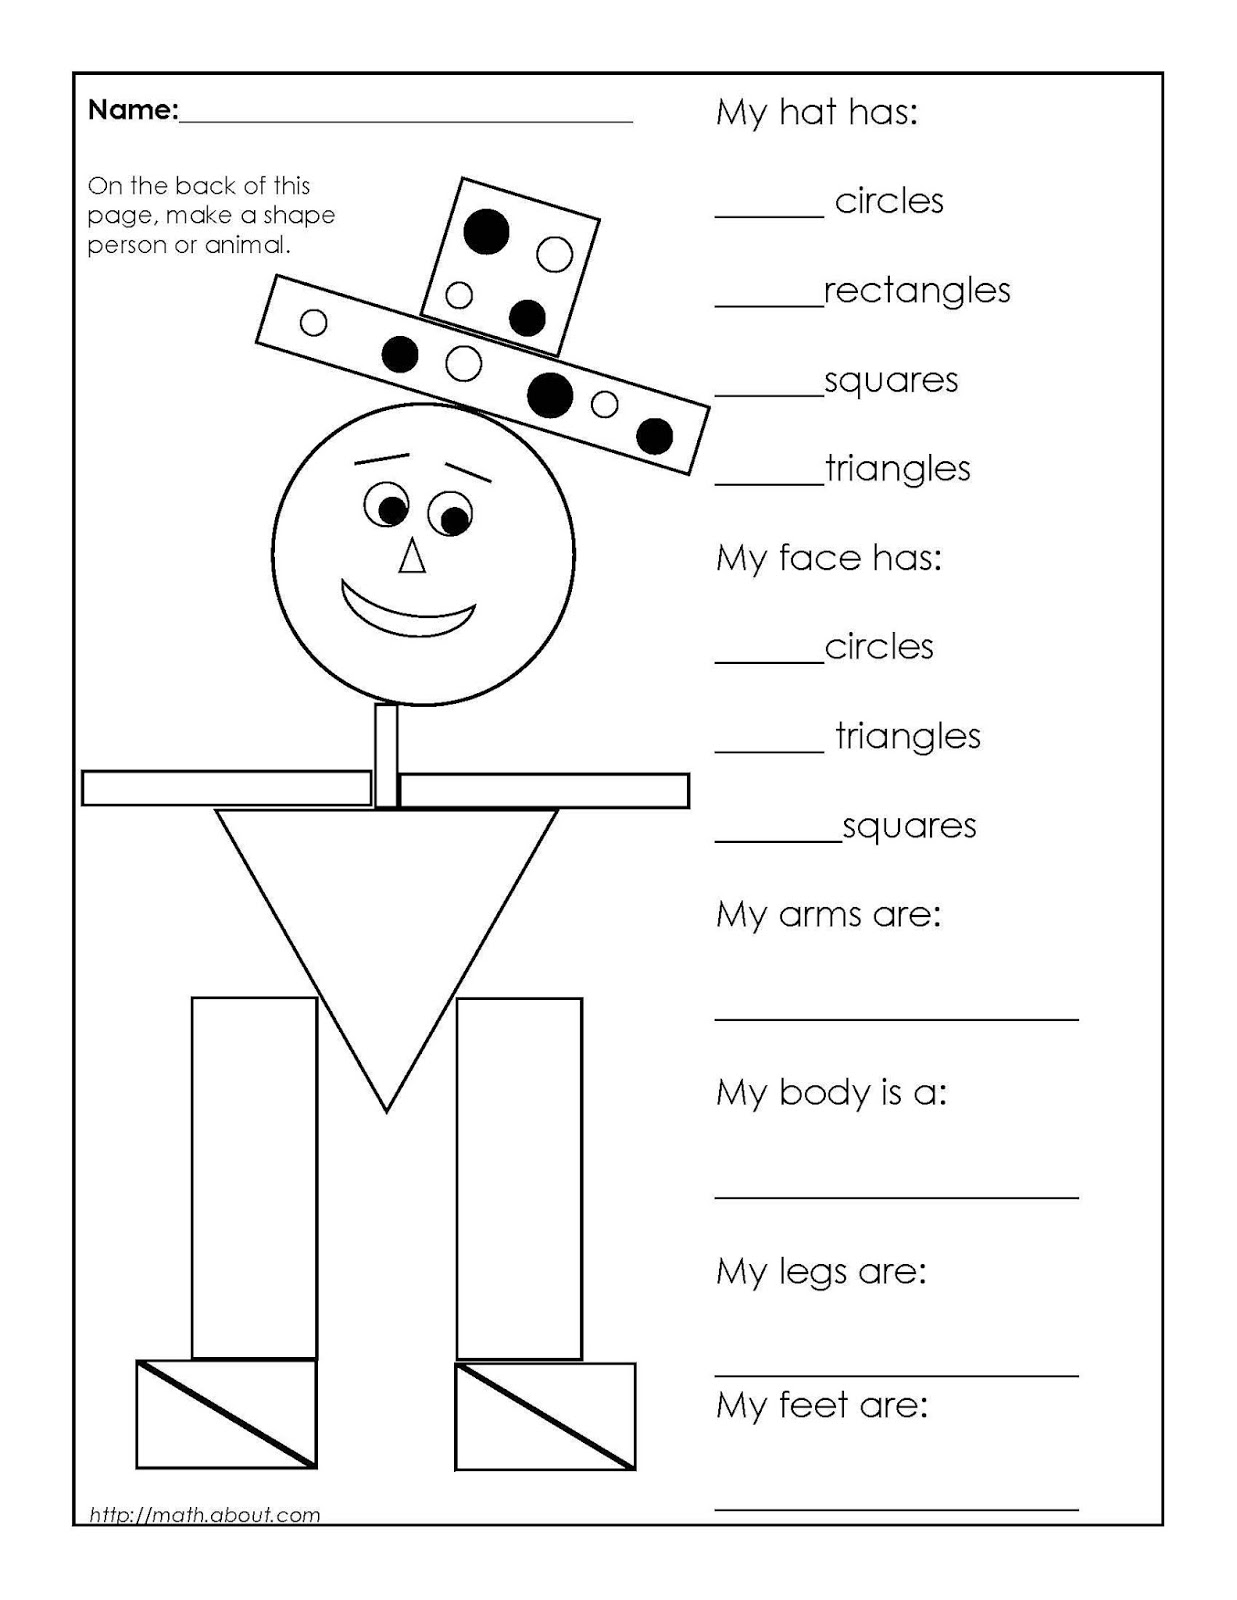 english-buddies-esl-worksheet-shapes